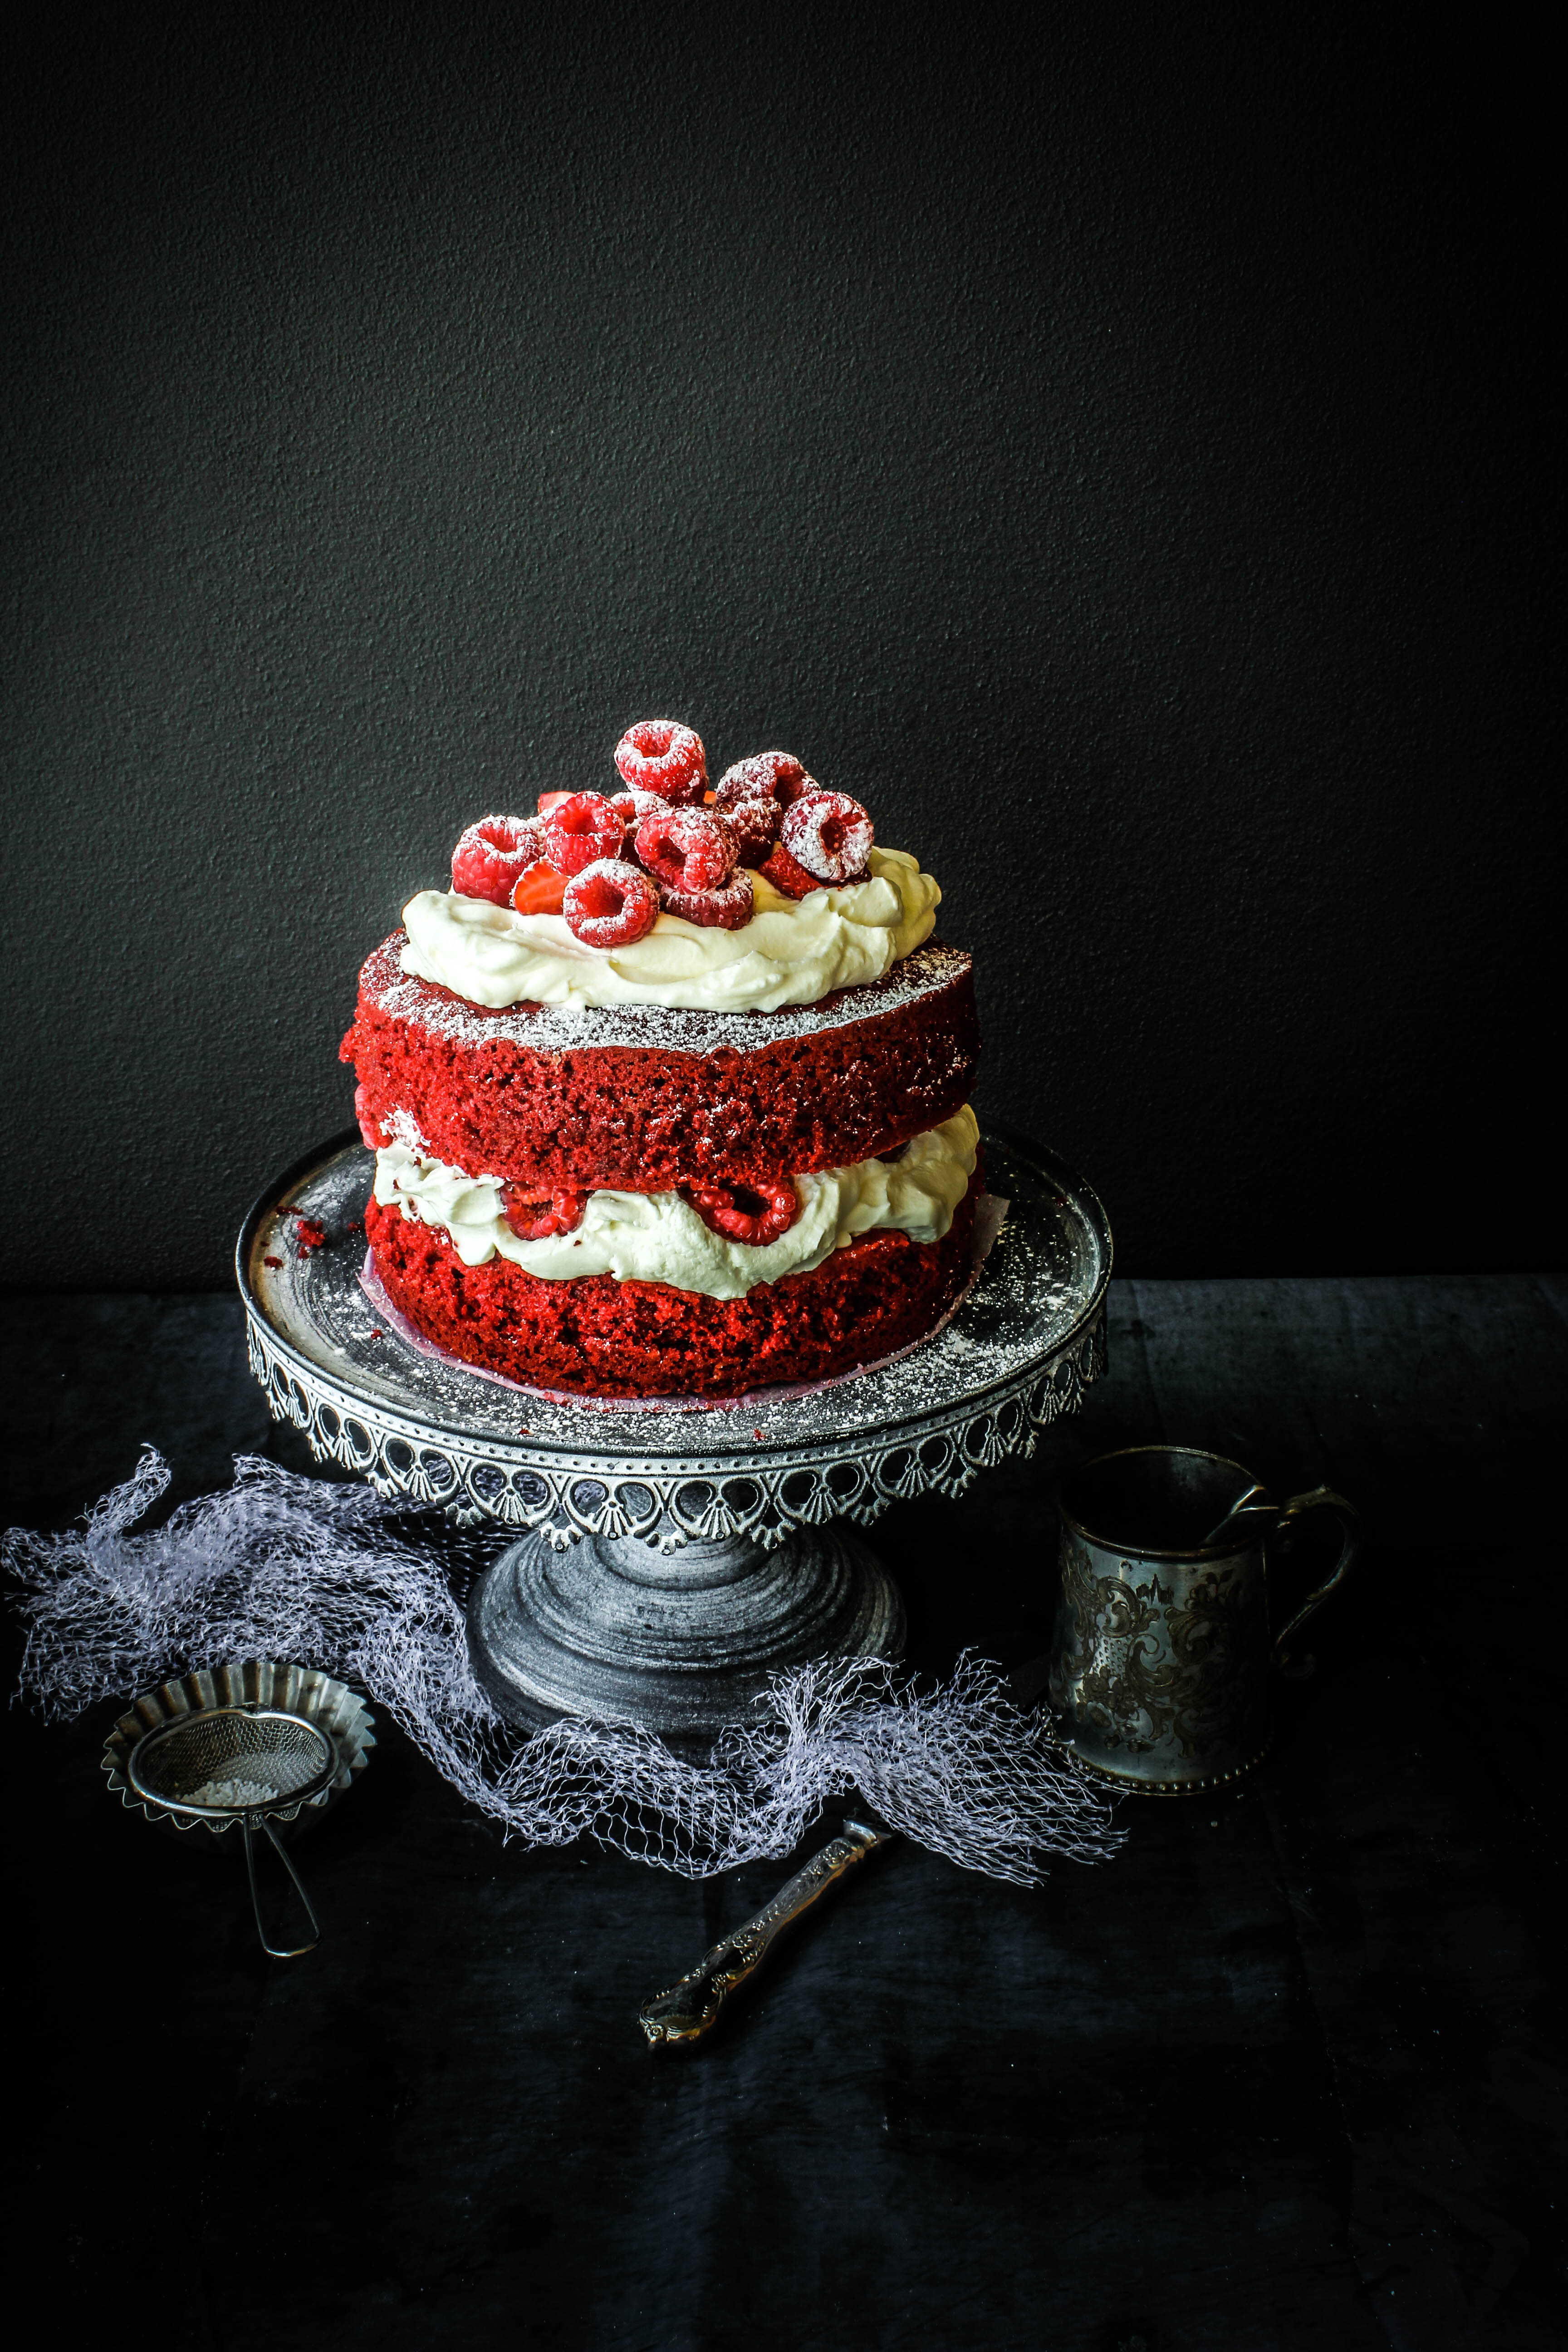 Red Velvet Cake with Raspberries And Cream - Sugar et al